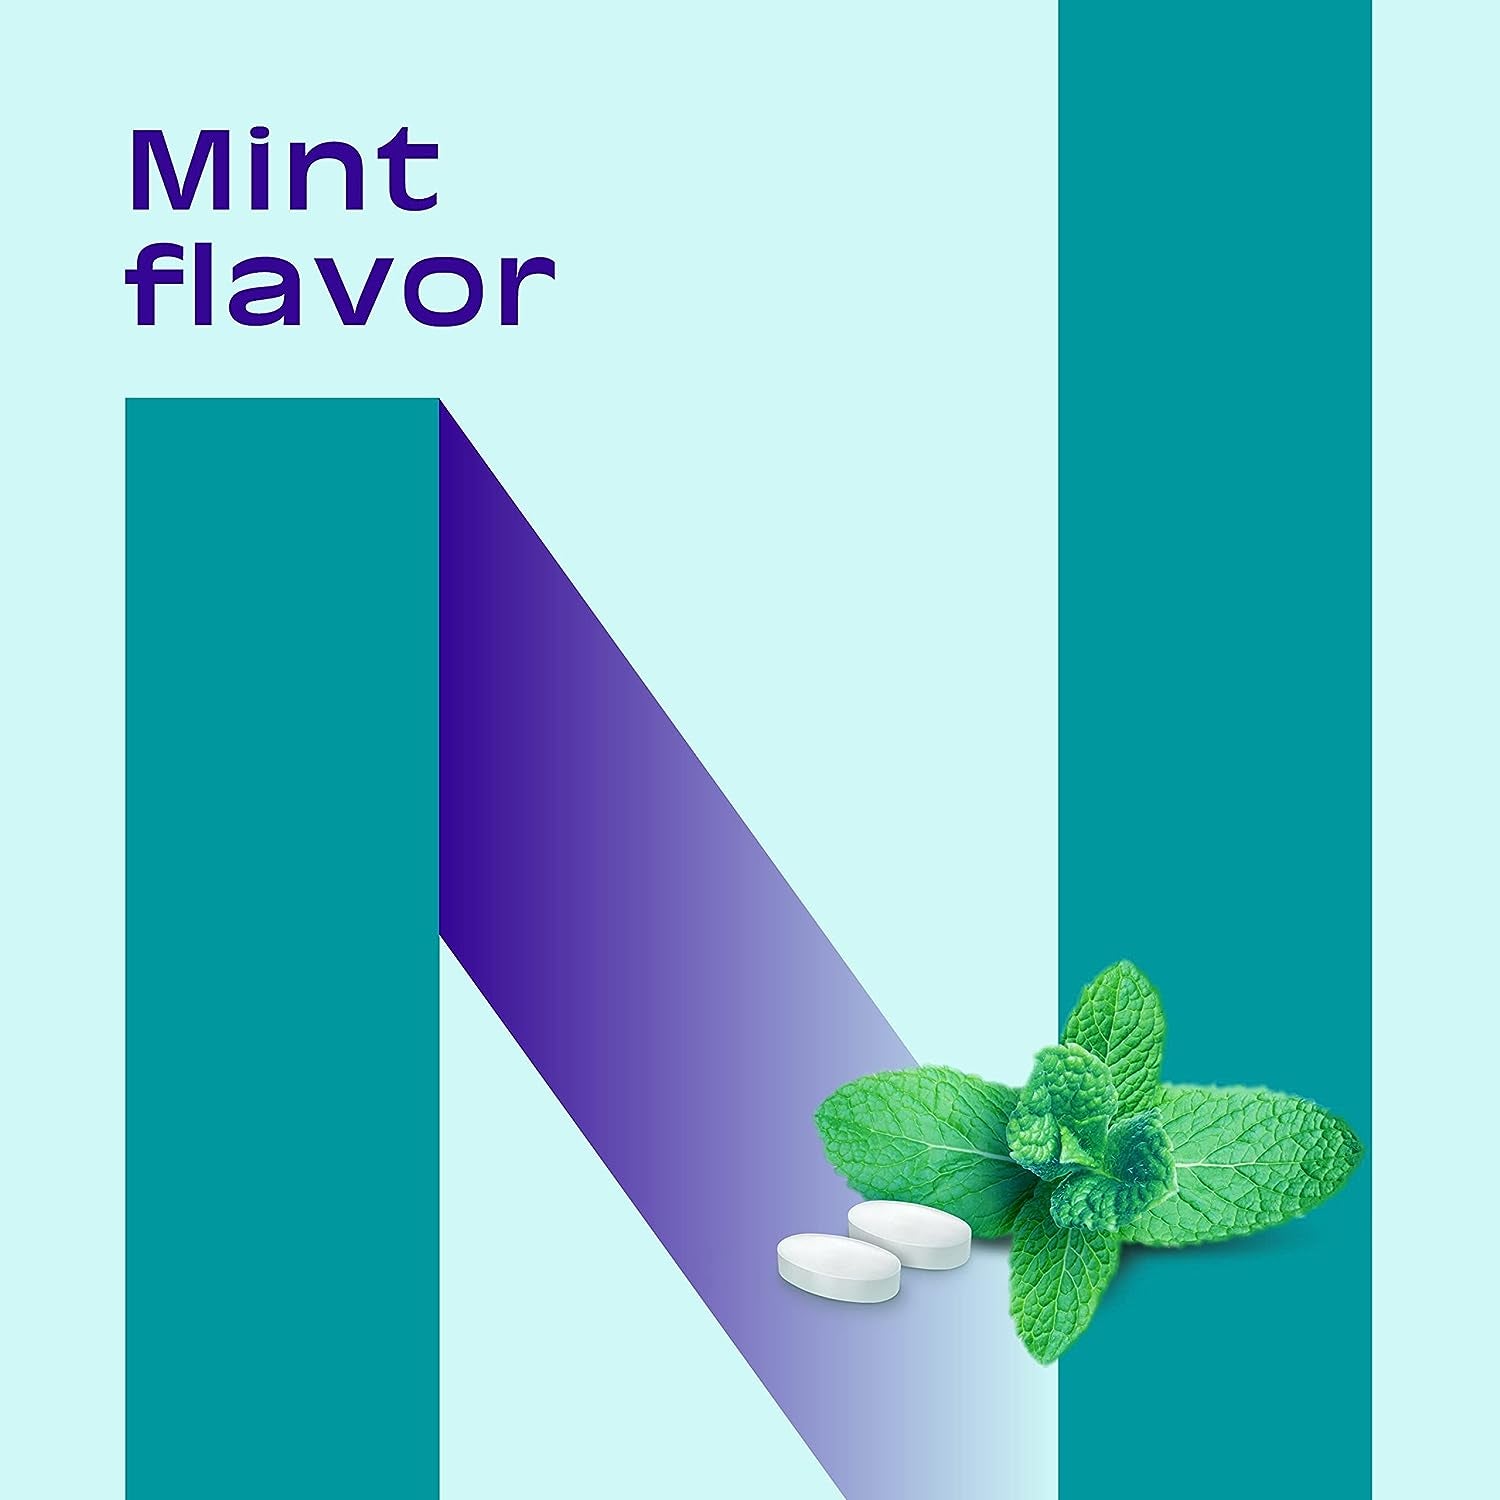 Nicorette 2 Mg Mini Nicotine Lozenges to Help Quit Smoking - Mint Flavor Stop Smoking Aid, 20 Count